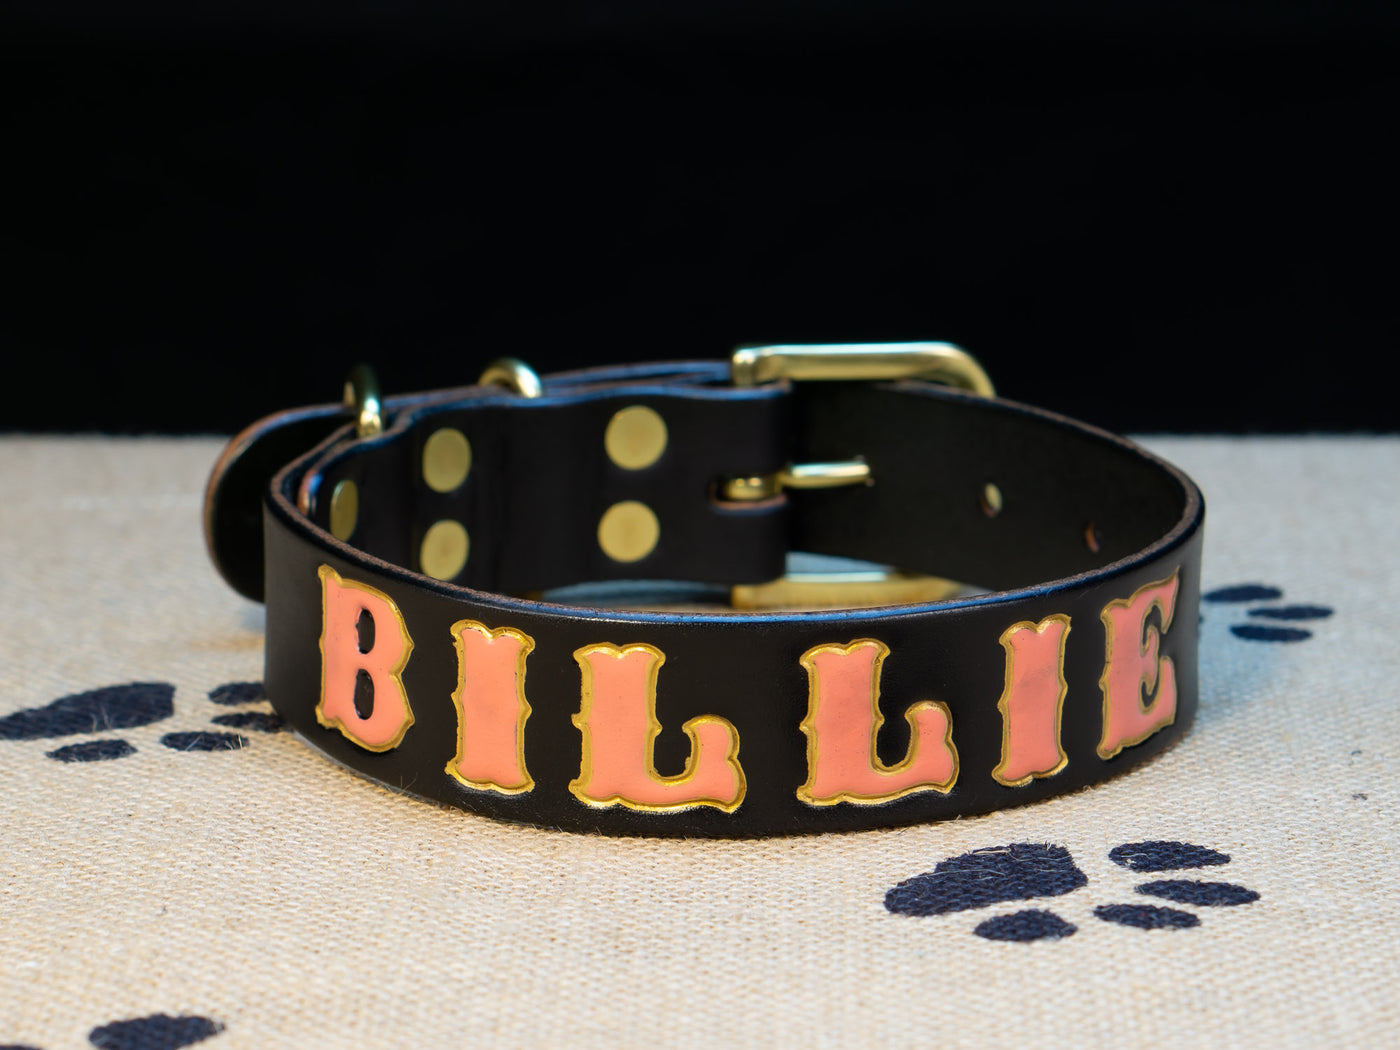 Leather Belt Personalised Dog Collar & Lead - Natural Brass Hardware - Atlas Leathercraft - Handmade Australian Leather Goods